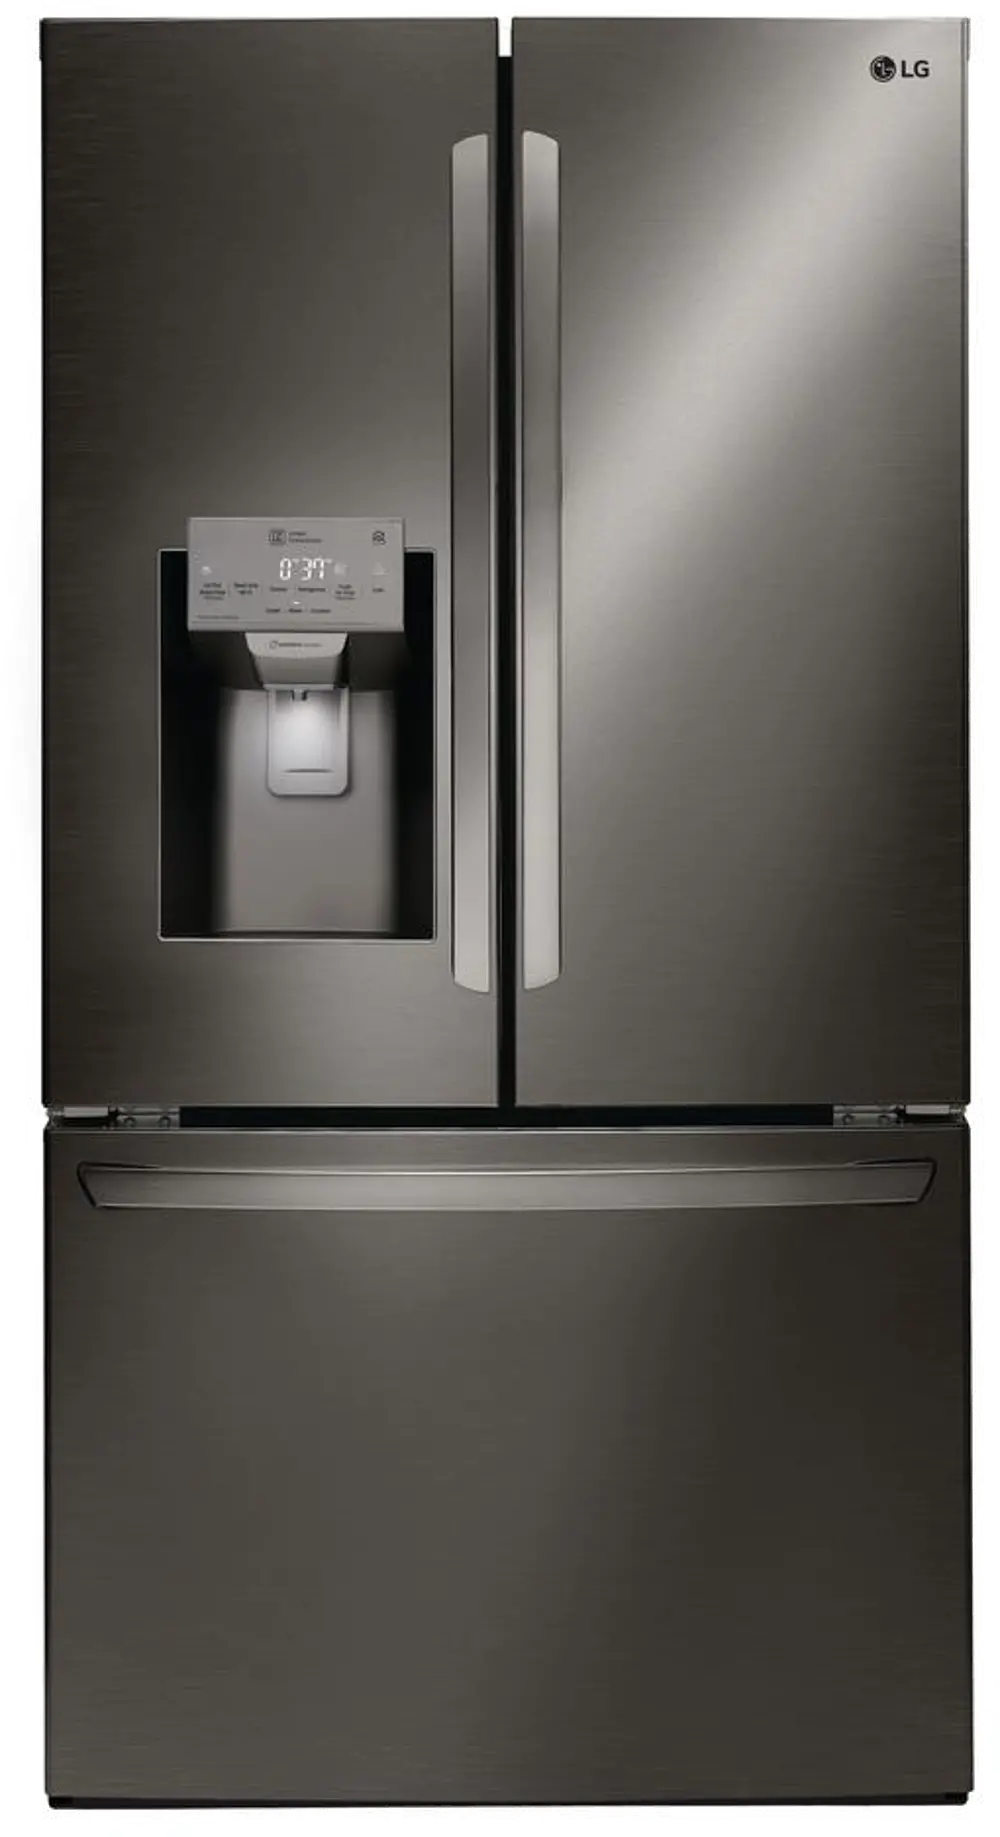 LFXS26973D LG 26.2 cu ft French Door Refrigerator - Black Stainless Steel-1